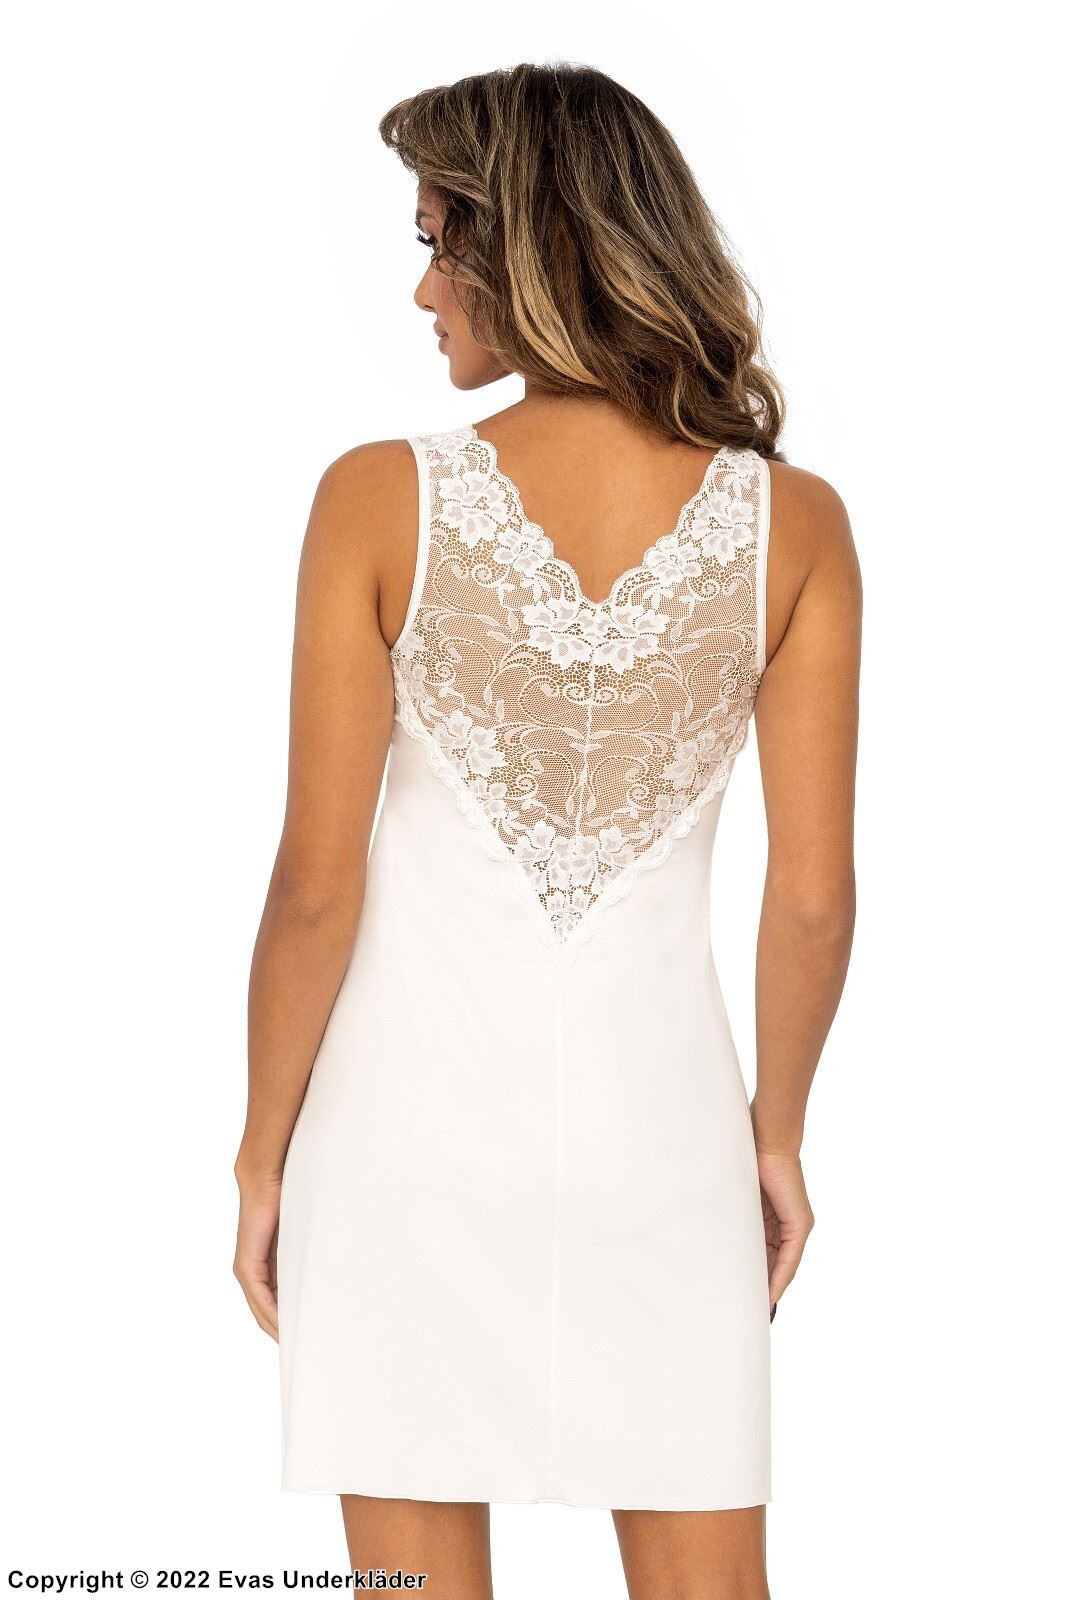 Elegant nightdress, high quality viscose, wide shoulder straps, openwork lace, flowers